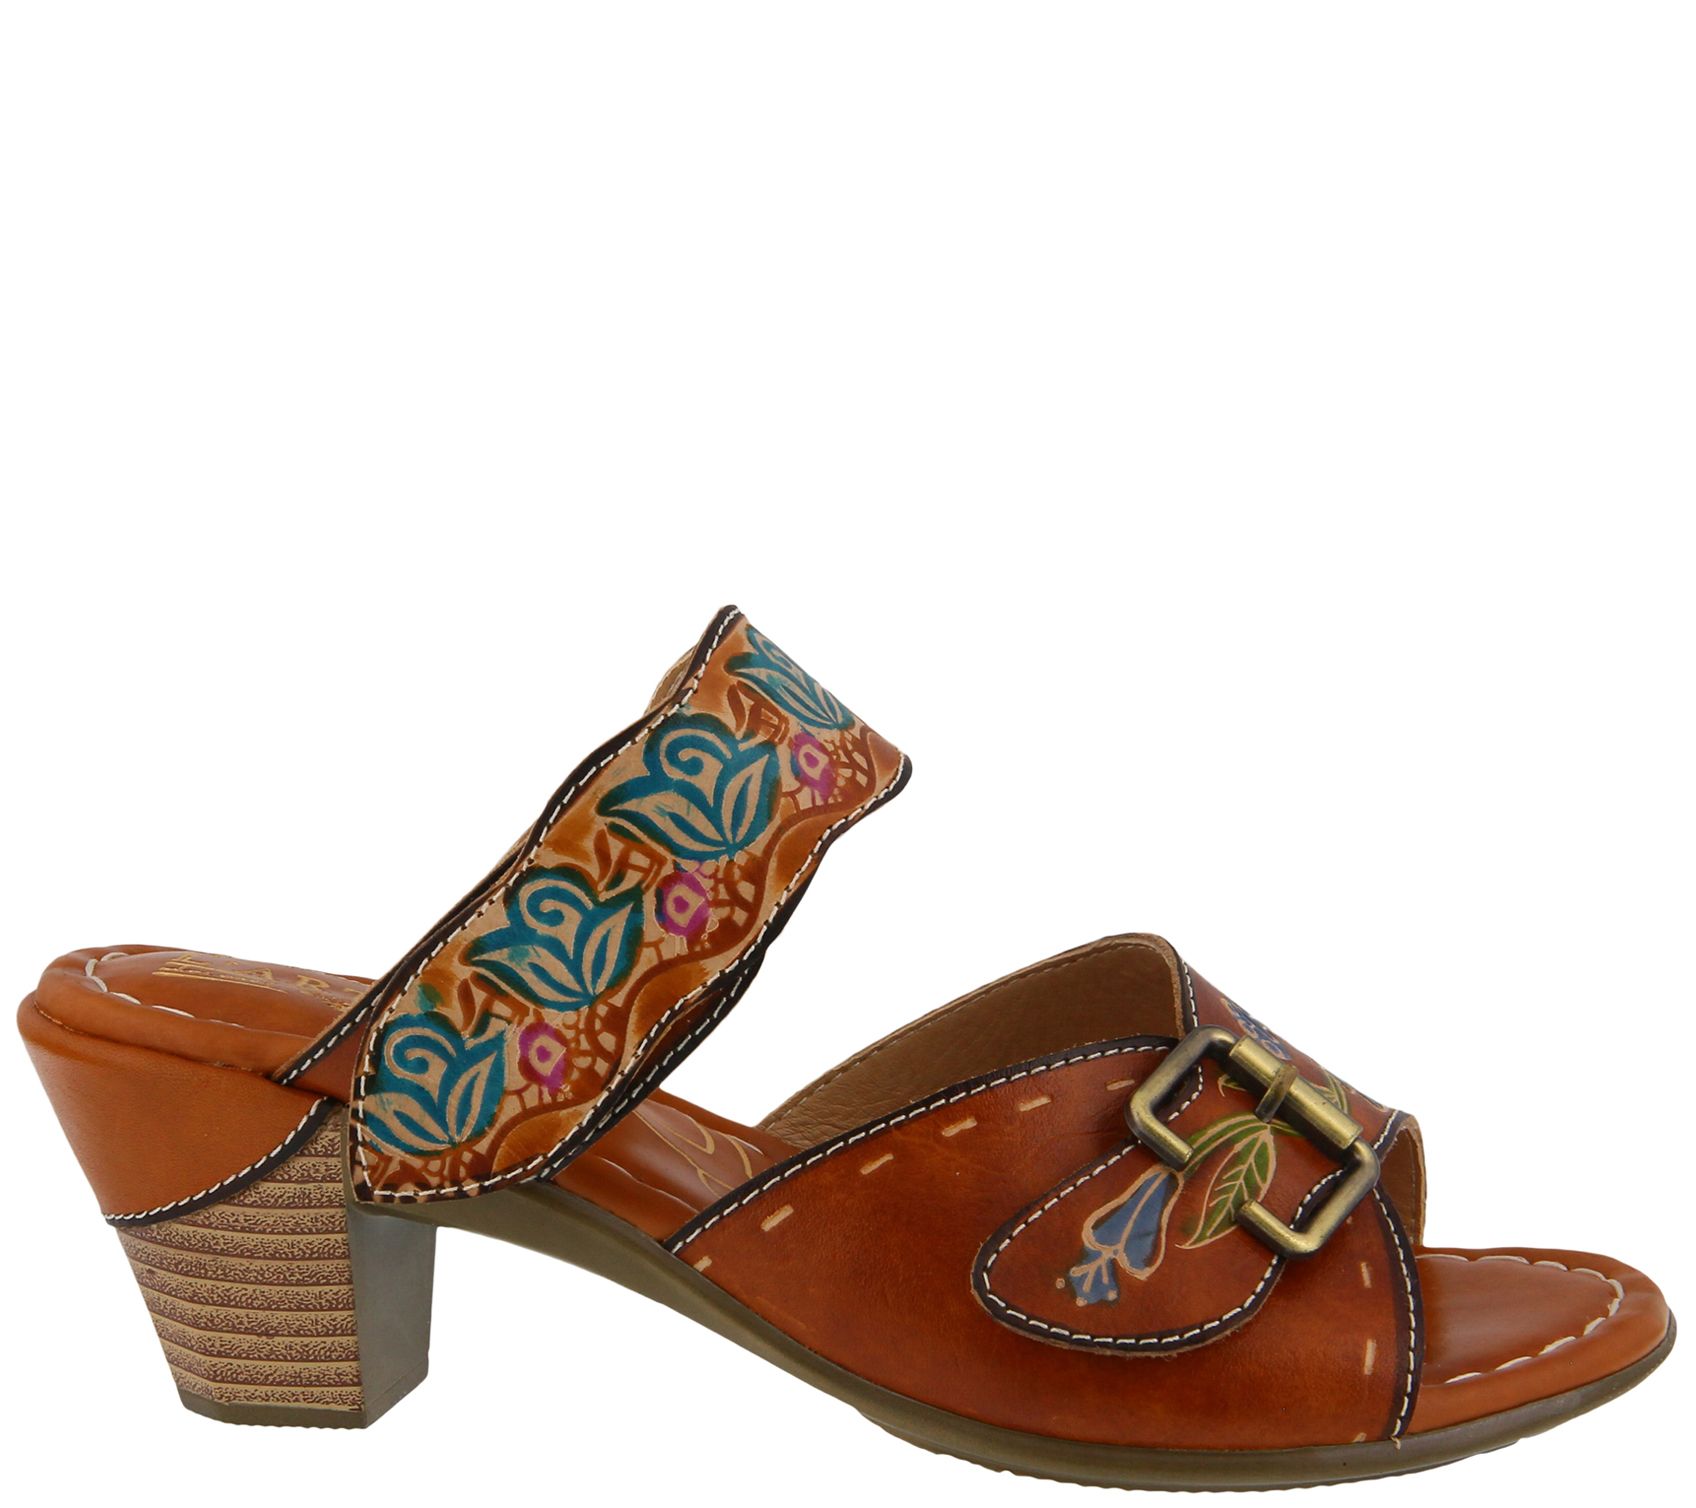 L'Artiste by Spring Step Leather Slide Sandals- Ozuna - QVC.com